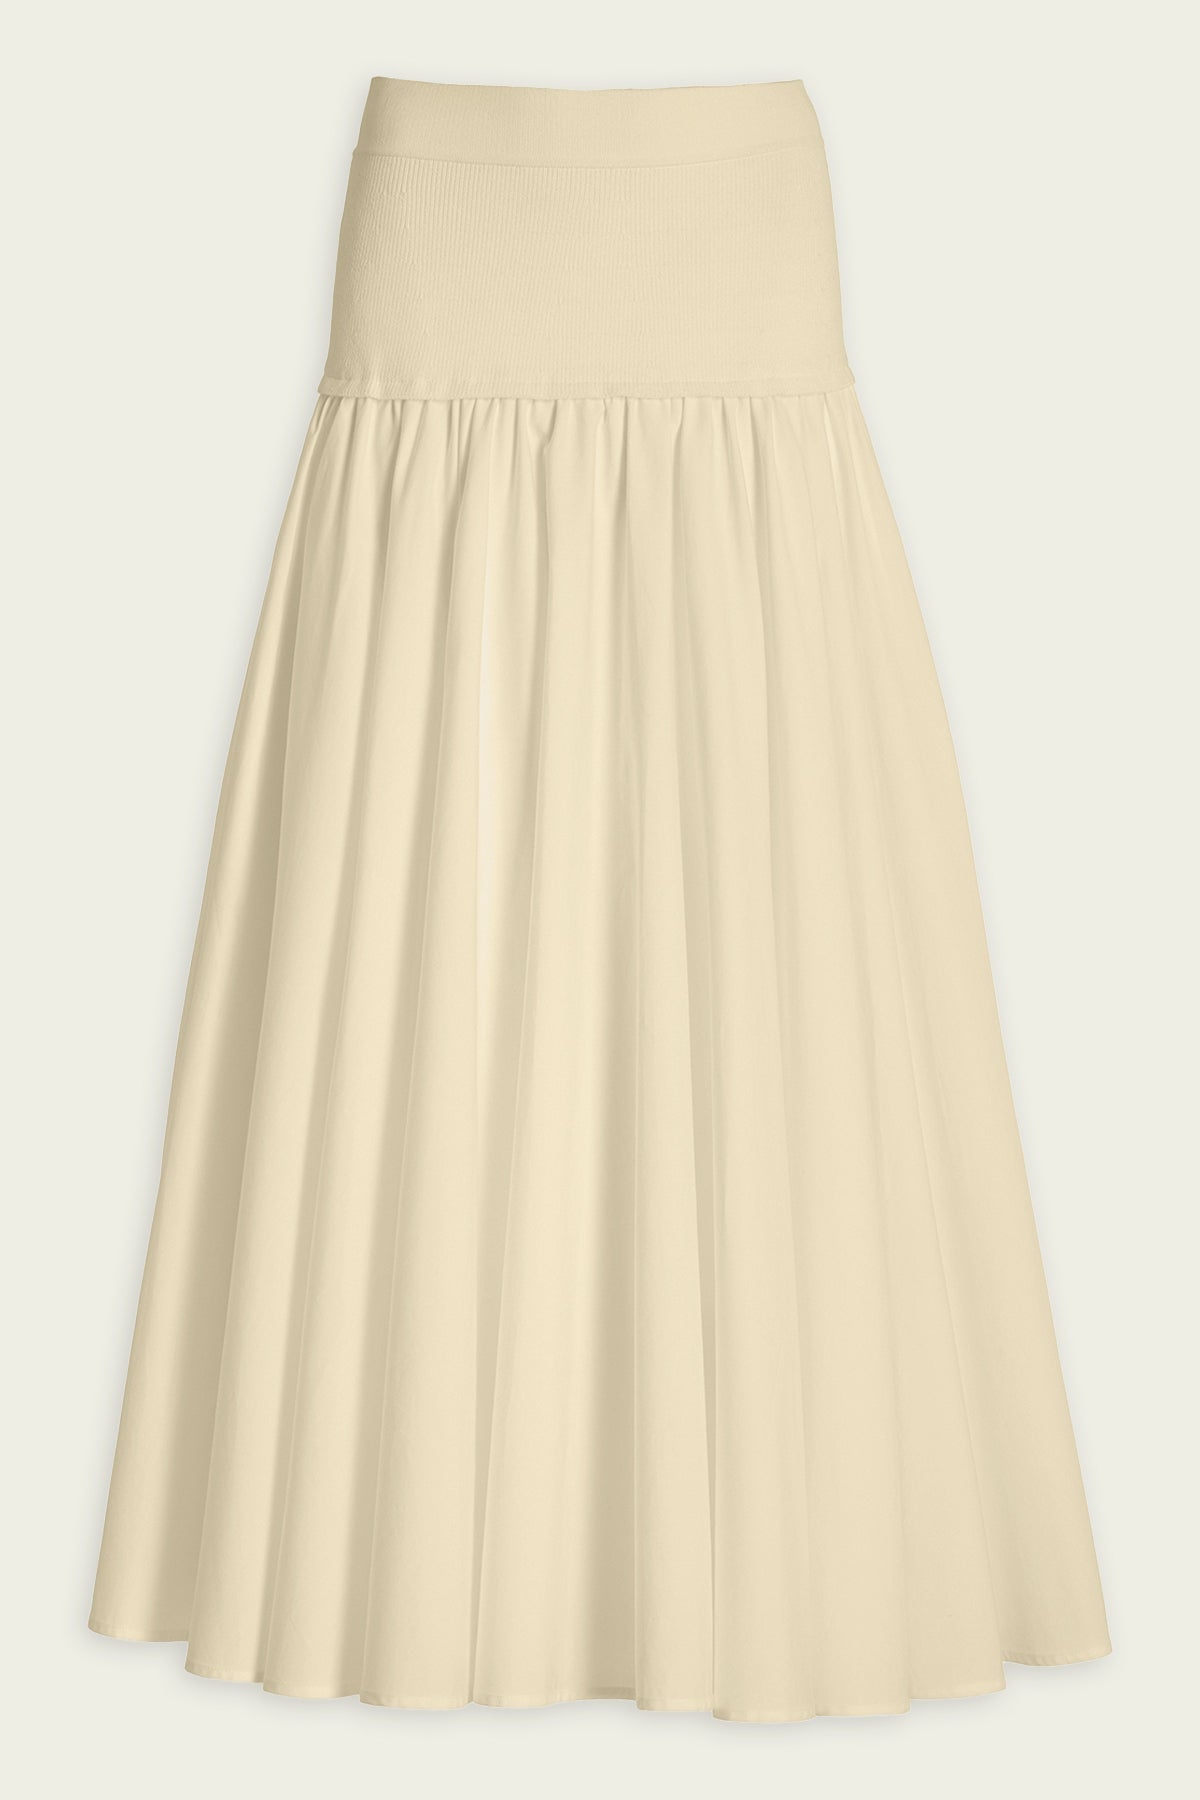 Stella Maxi Skirt in Sand - shop-olivia.com